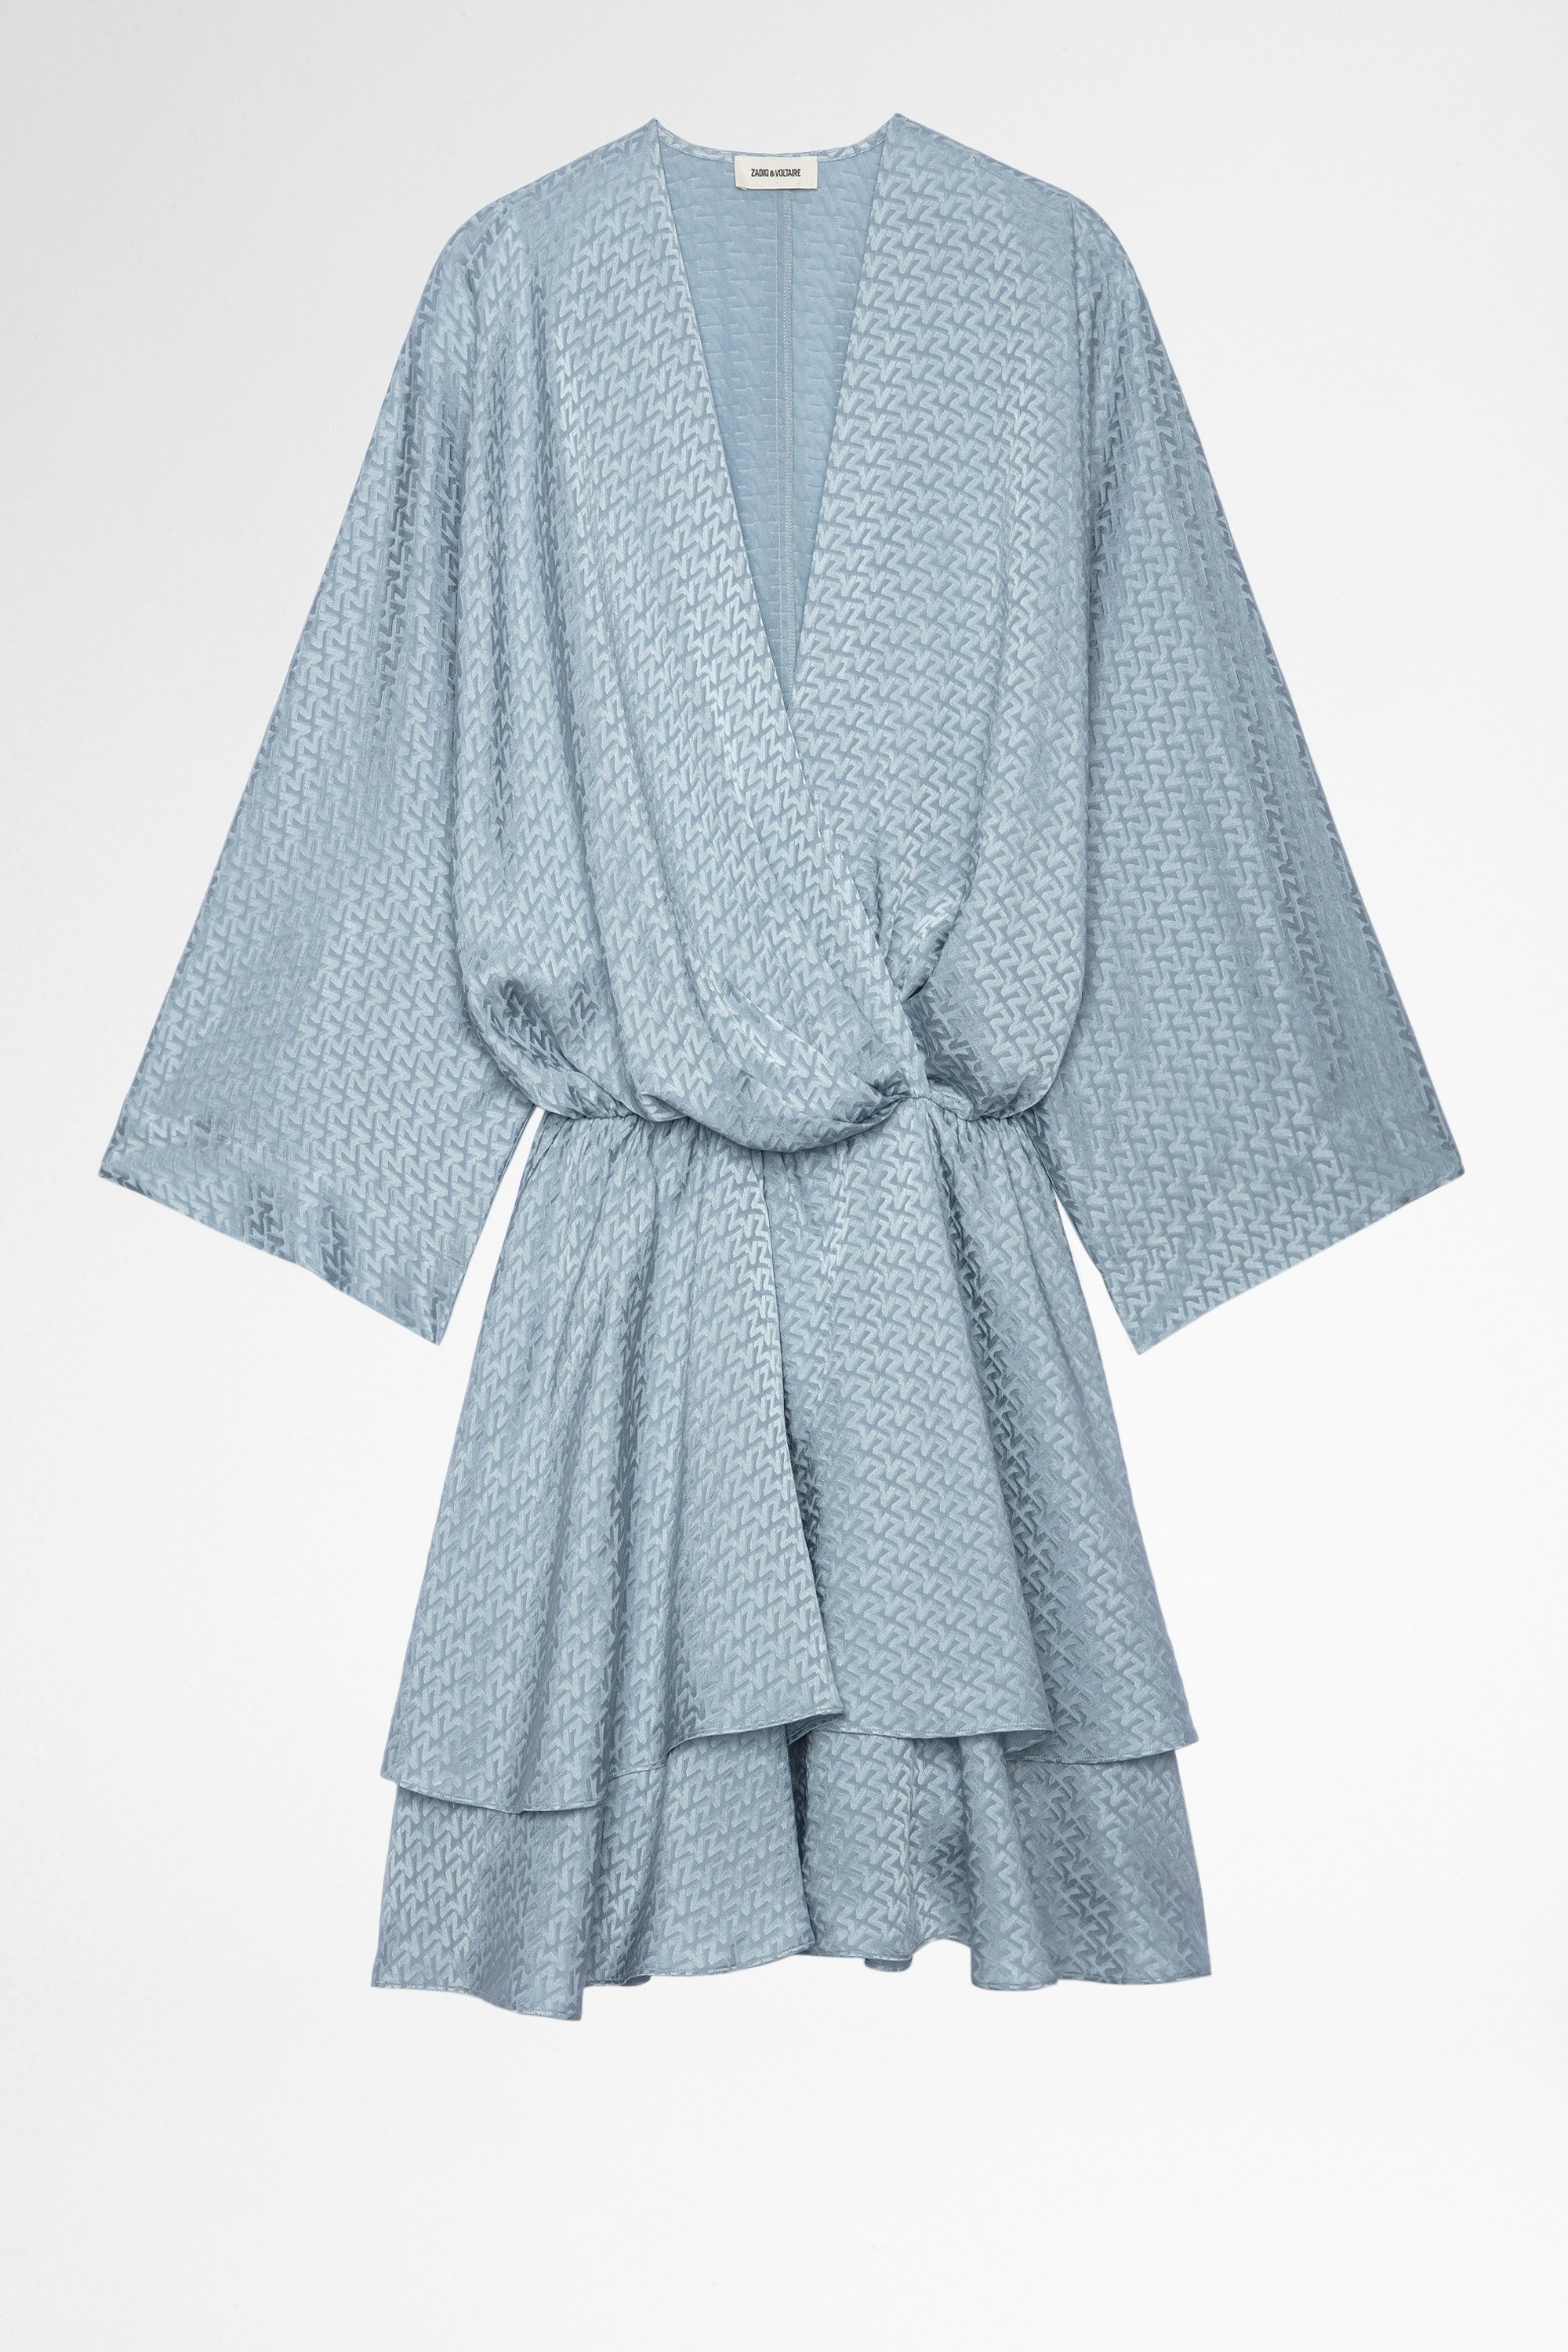 Hailey Dress Silk ZV silk jacquard dress in sky-blue